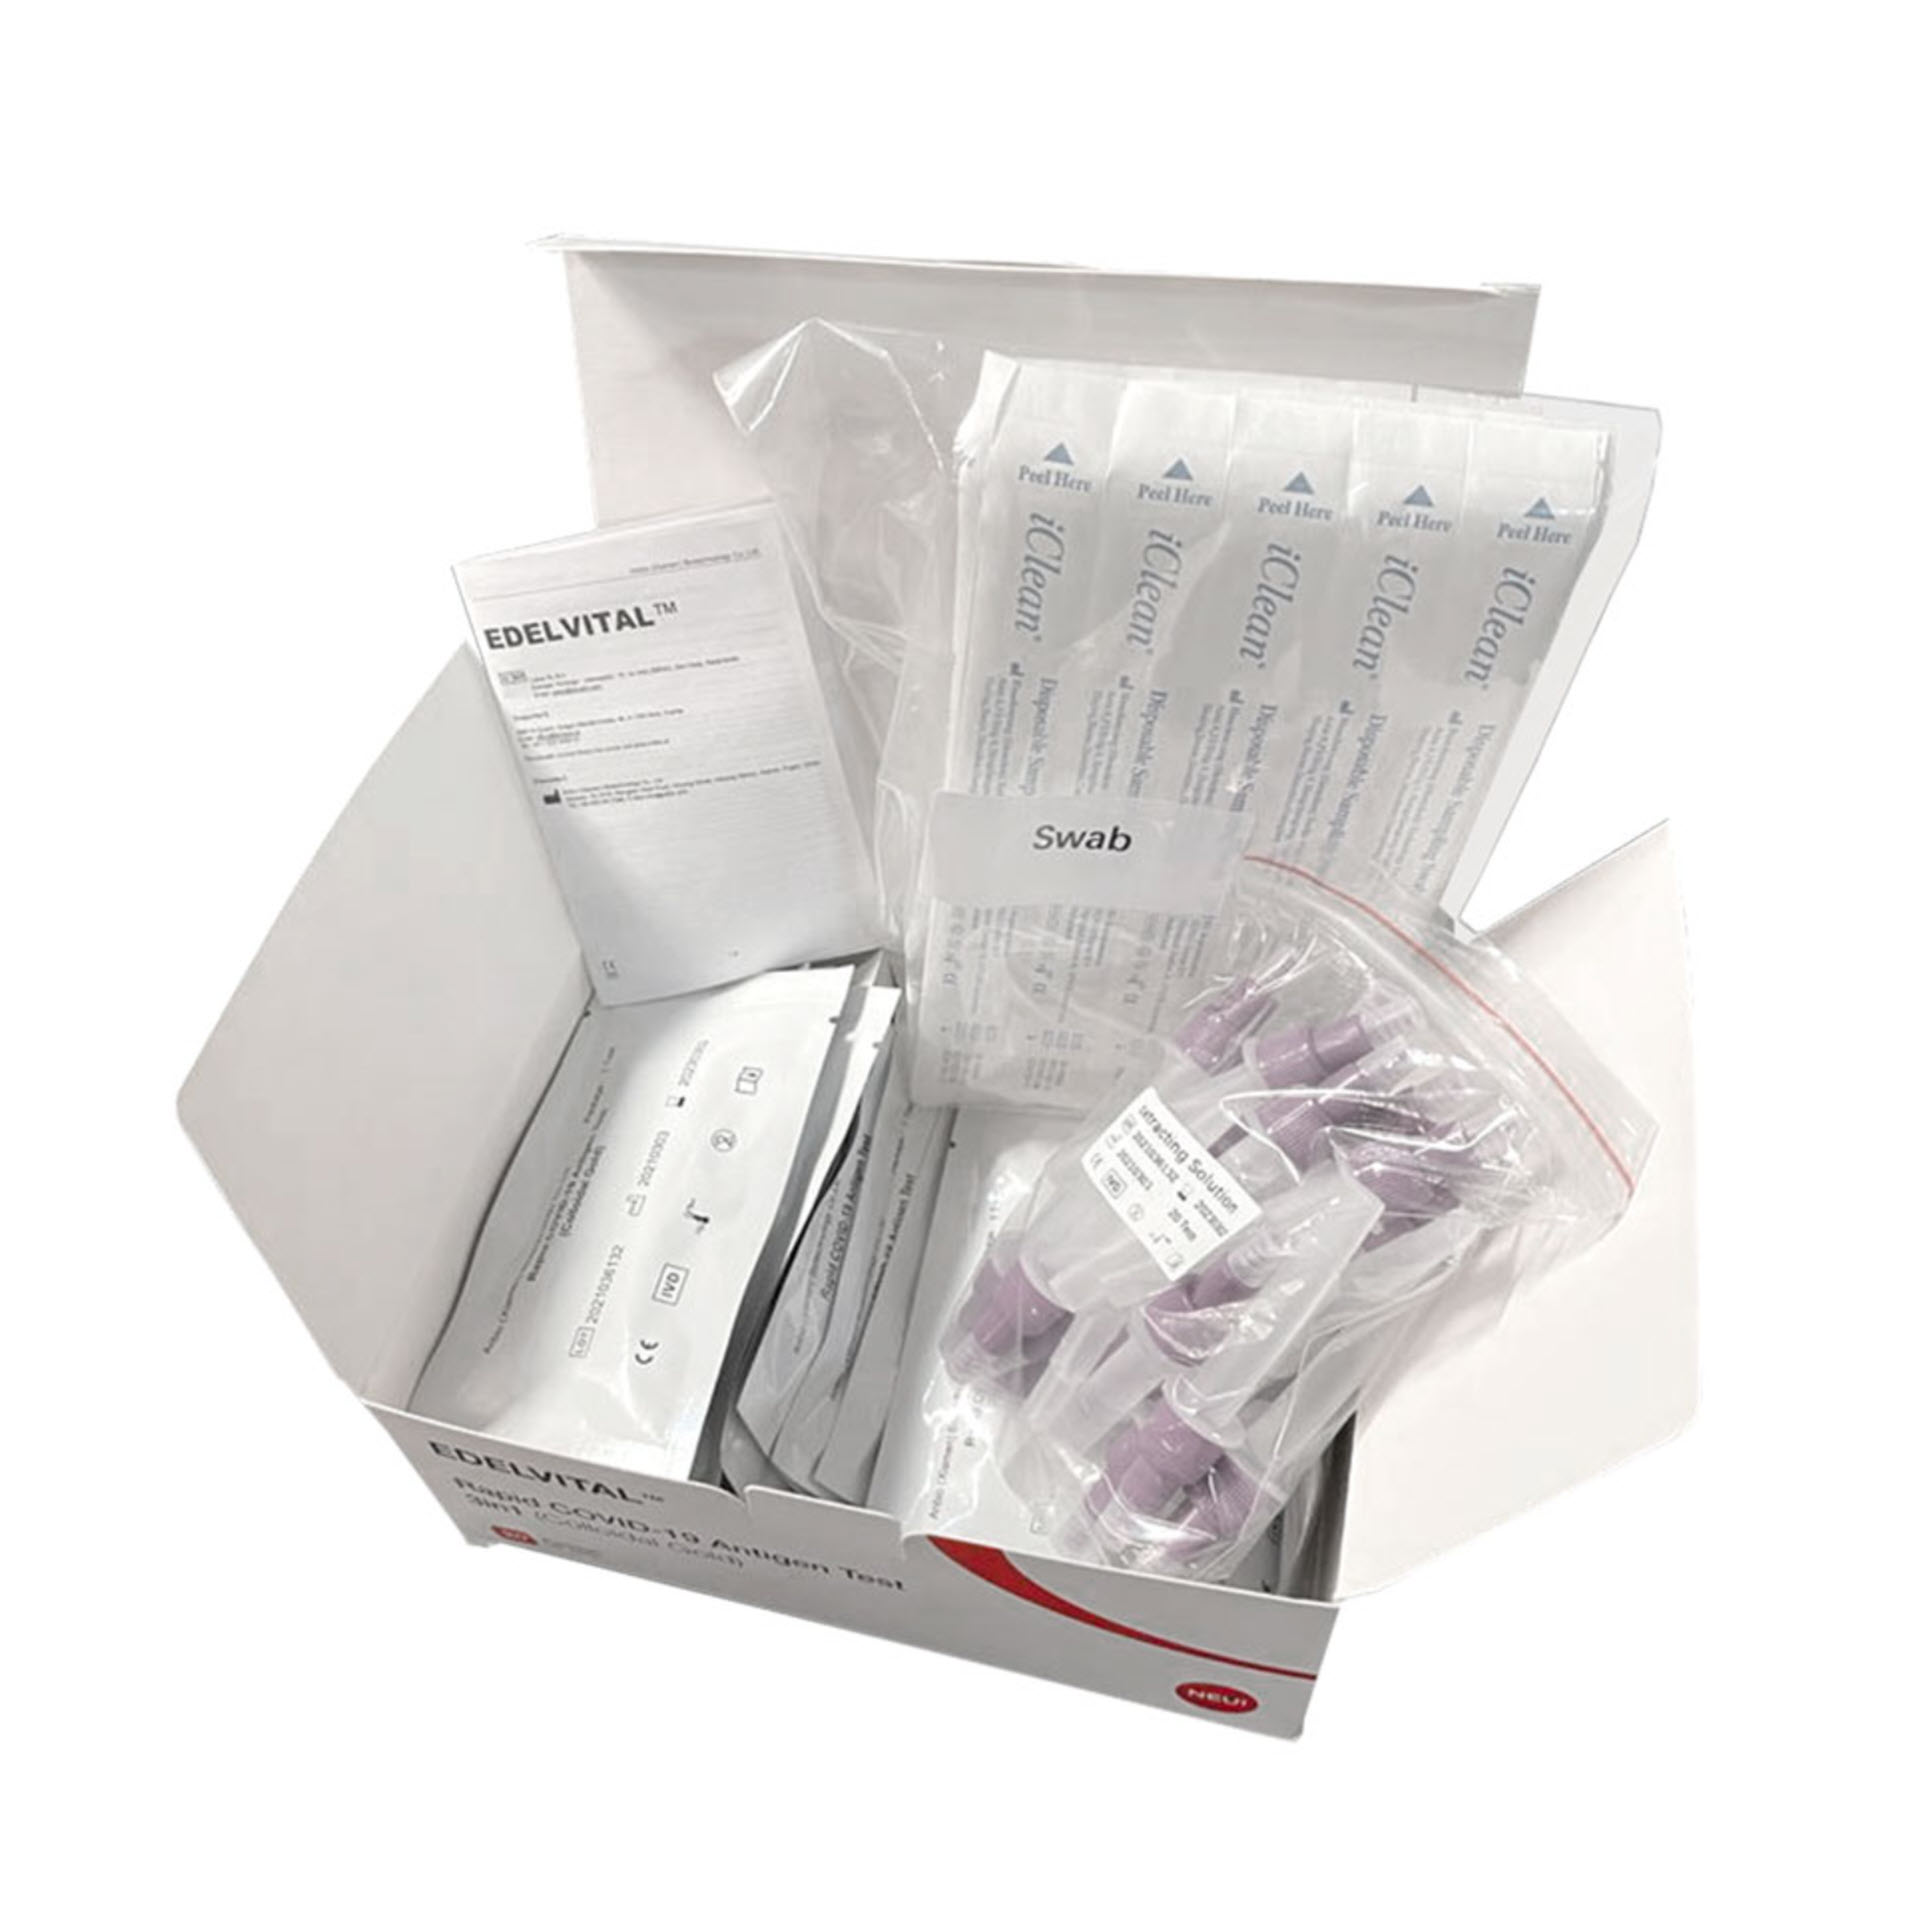 Edelvital 3in1 Rapid Covid-19 Antigen Test (Colloidal Gold) - 20er Test/Box (Nase, Rachen oder Nasal)